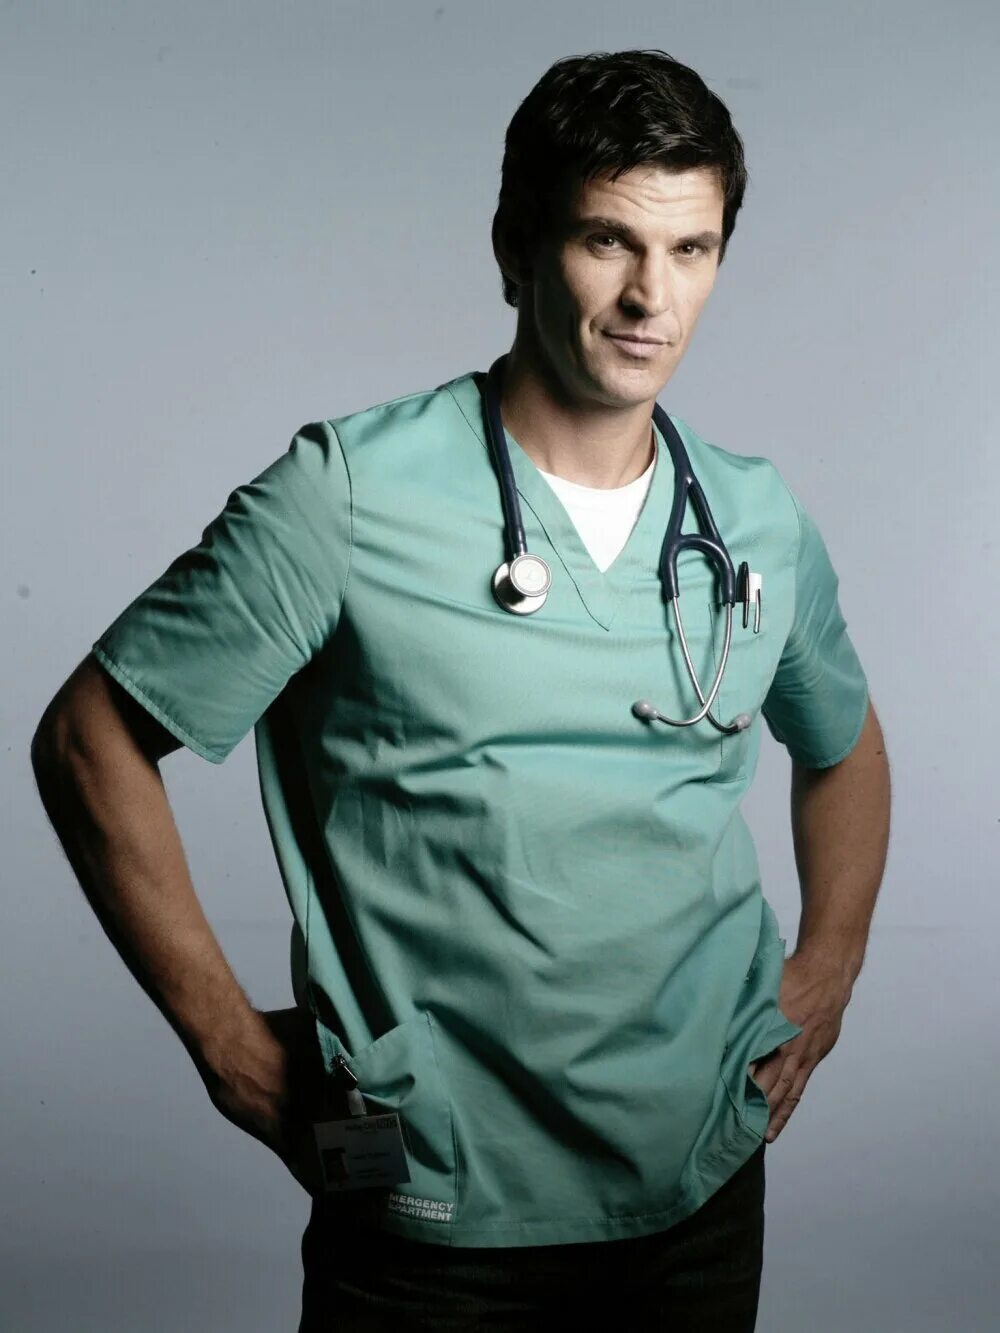 Тристан Геммилл. Врач мужчина. Красивый парень врач. Красивый доктор. Муж врач гинеколог